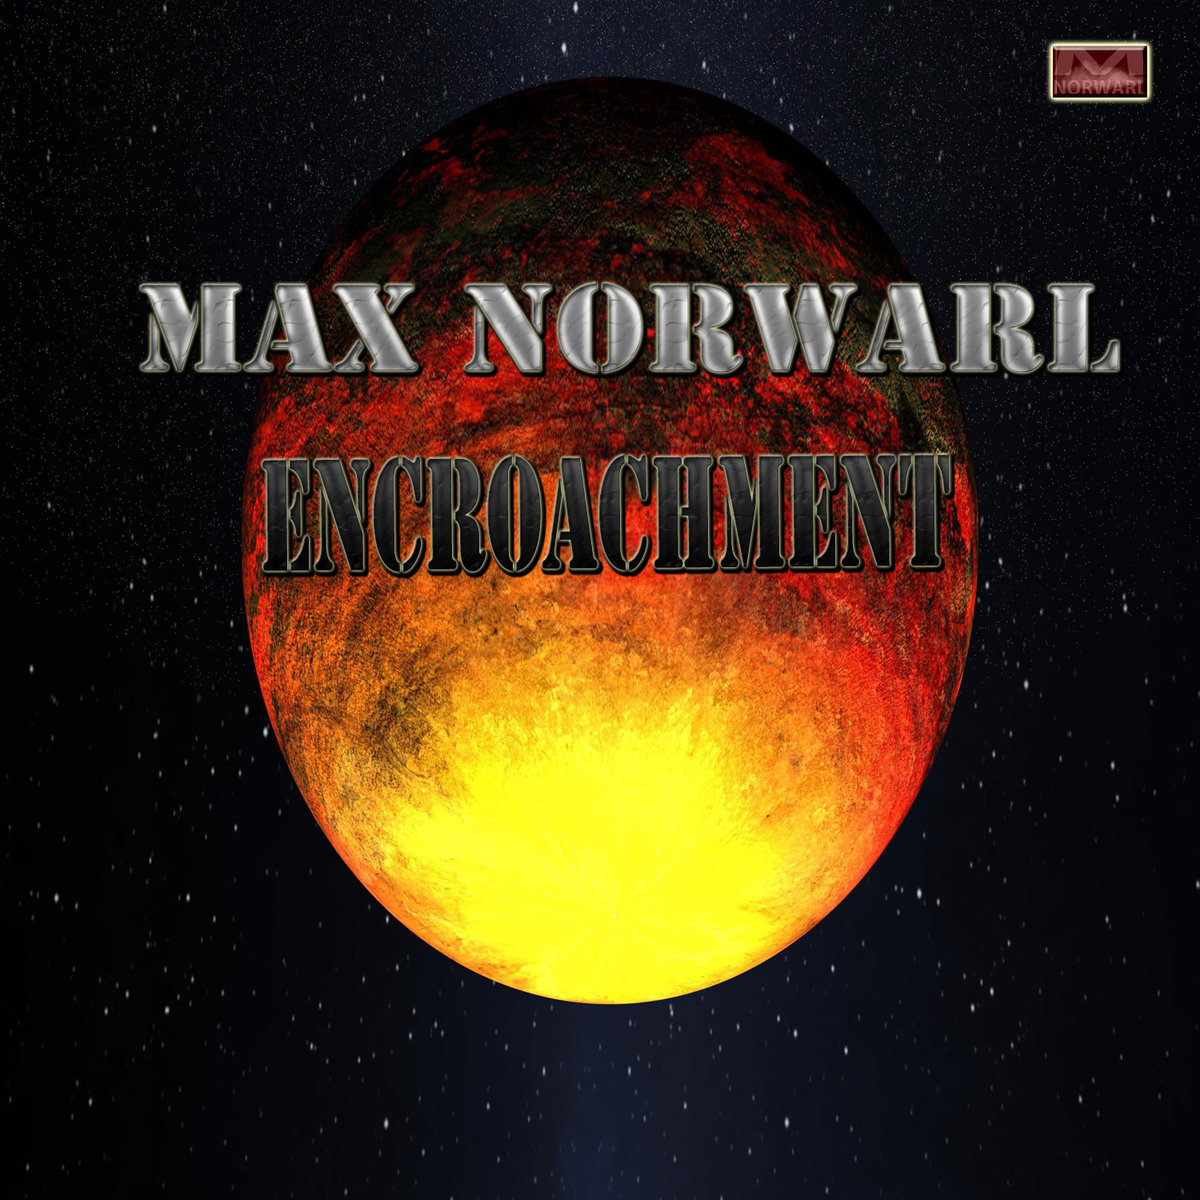 Release Encroachment      Artists Max Norwarl     Release Date 2015-04-08